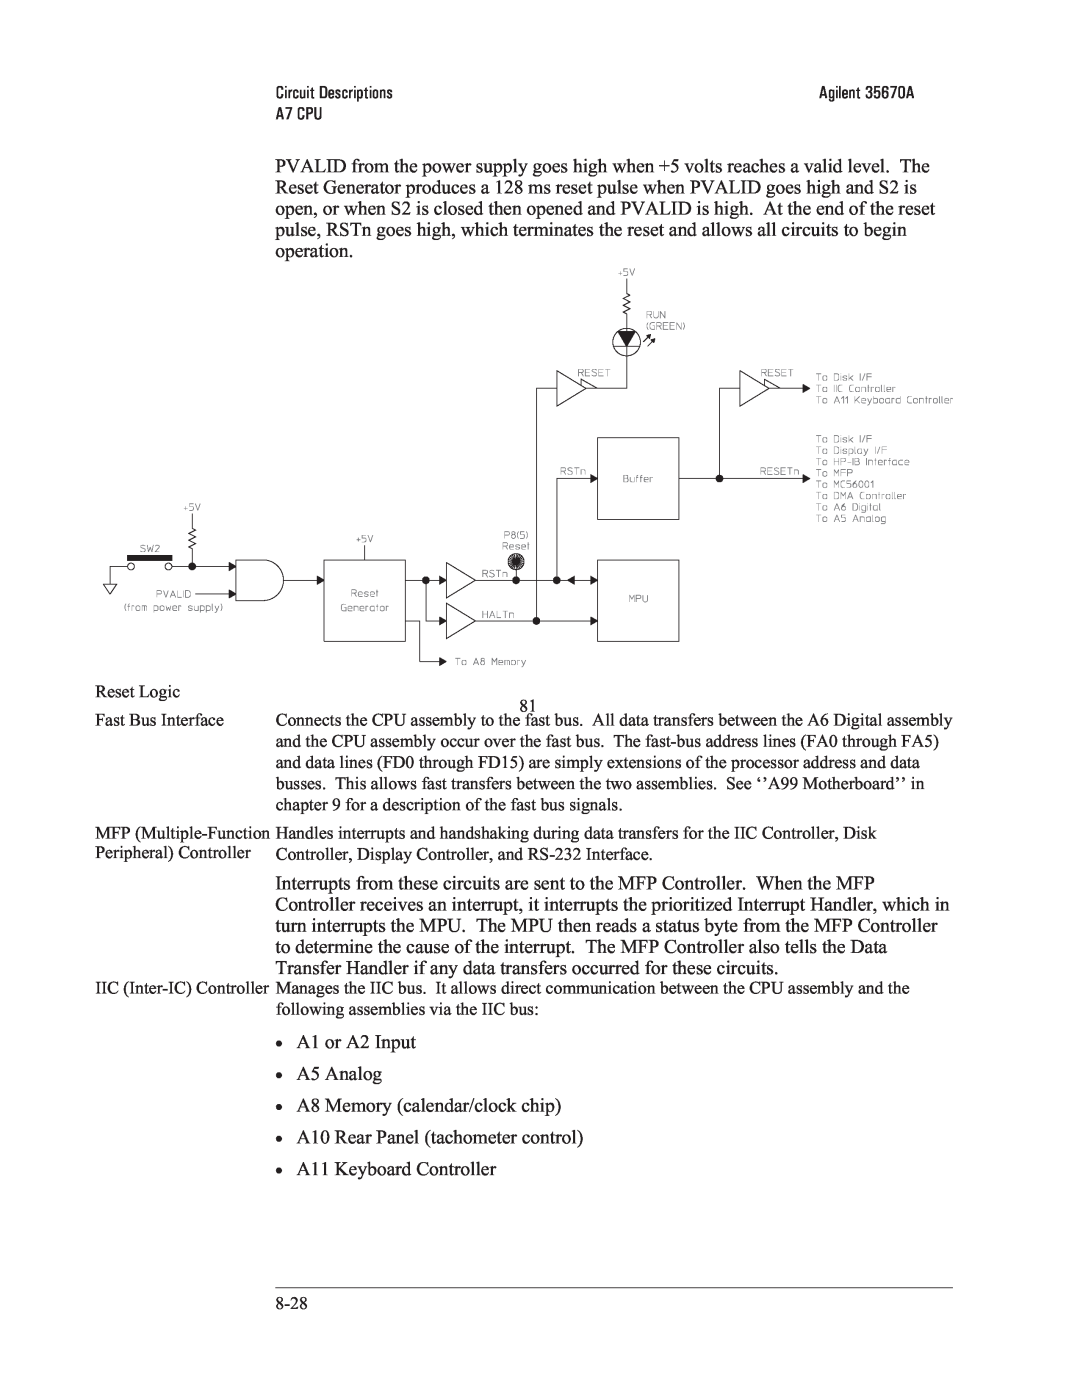 Agilent Technologies 35670-90066 manual •A1 or A2 Input •A5 Analog 